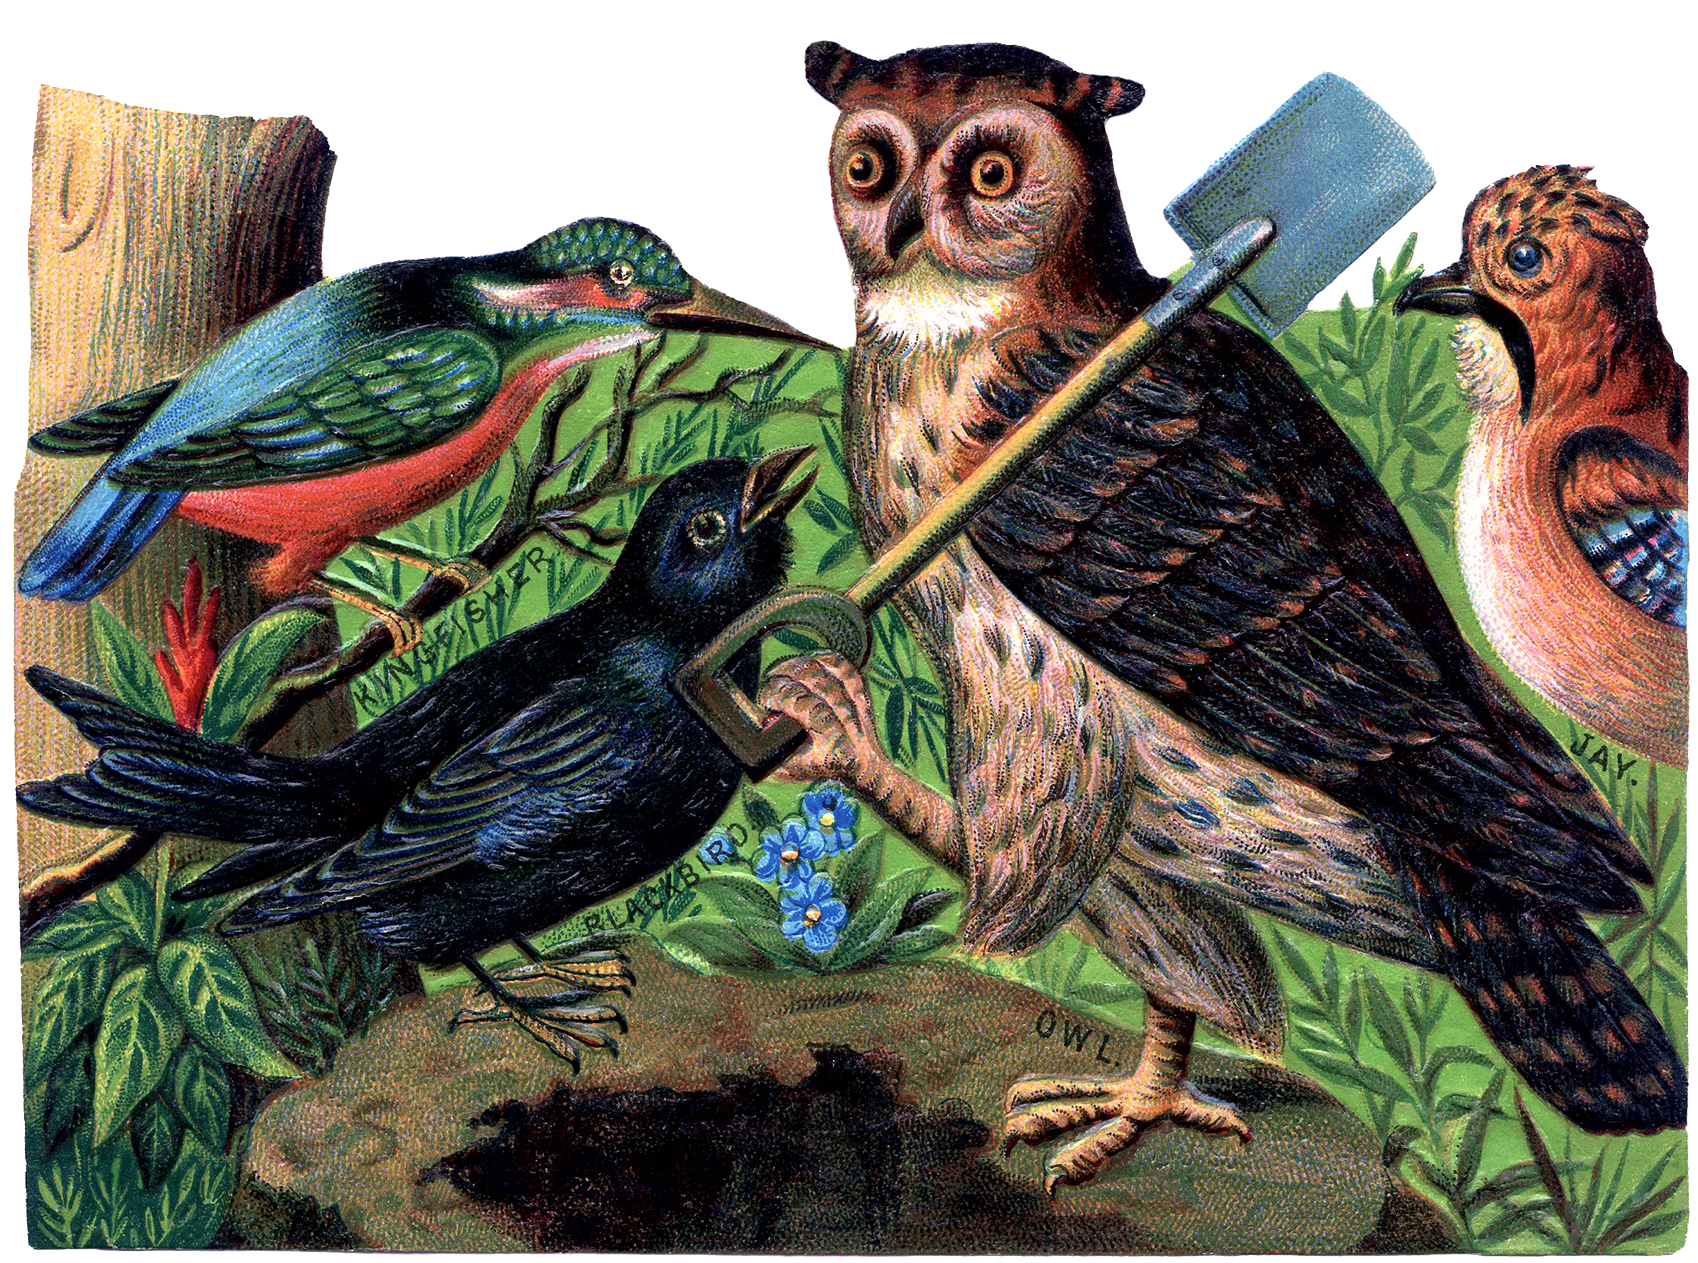 Vintage Halloween Owl Image - The Graphics Fairy